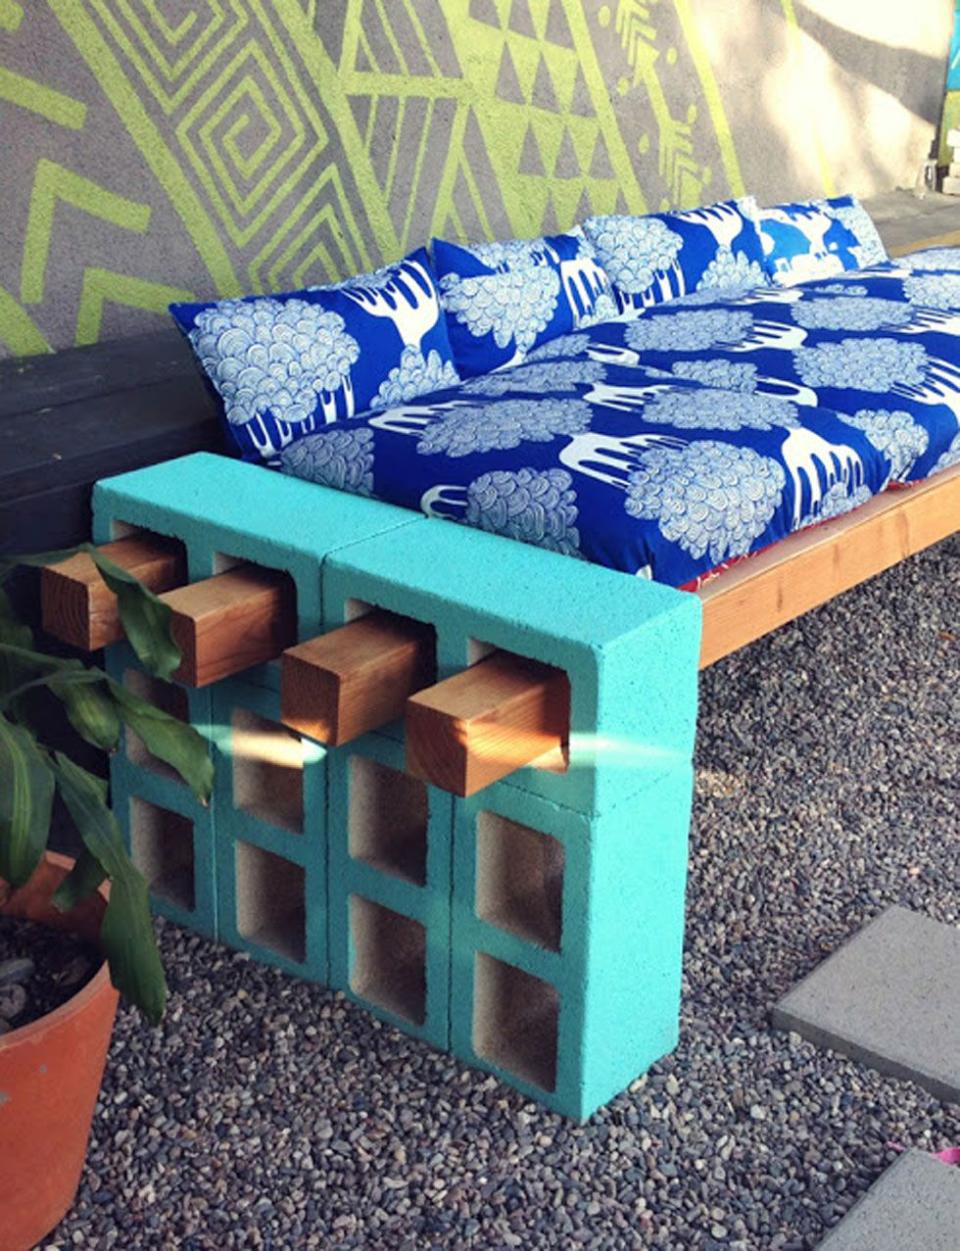 Use Cinderblocks to Create a DIY Bench